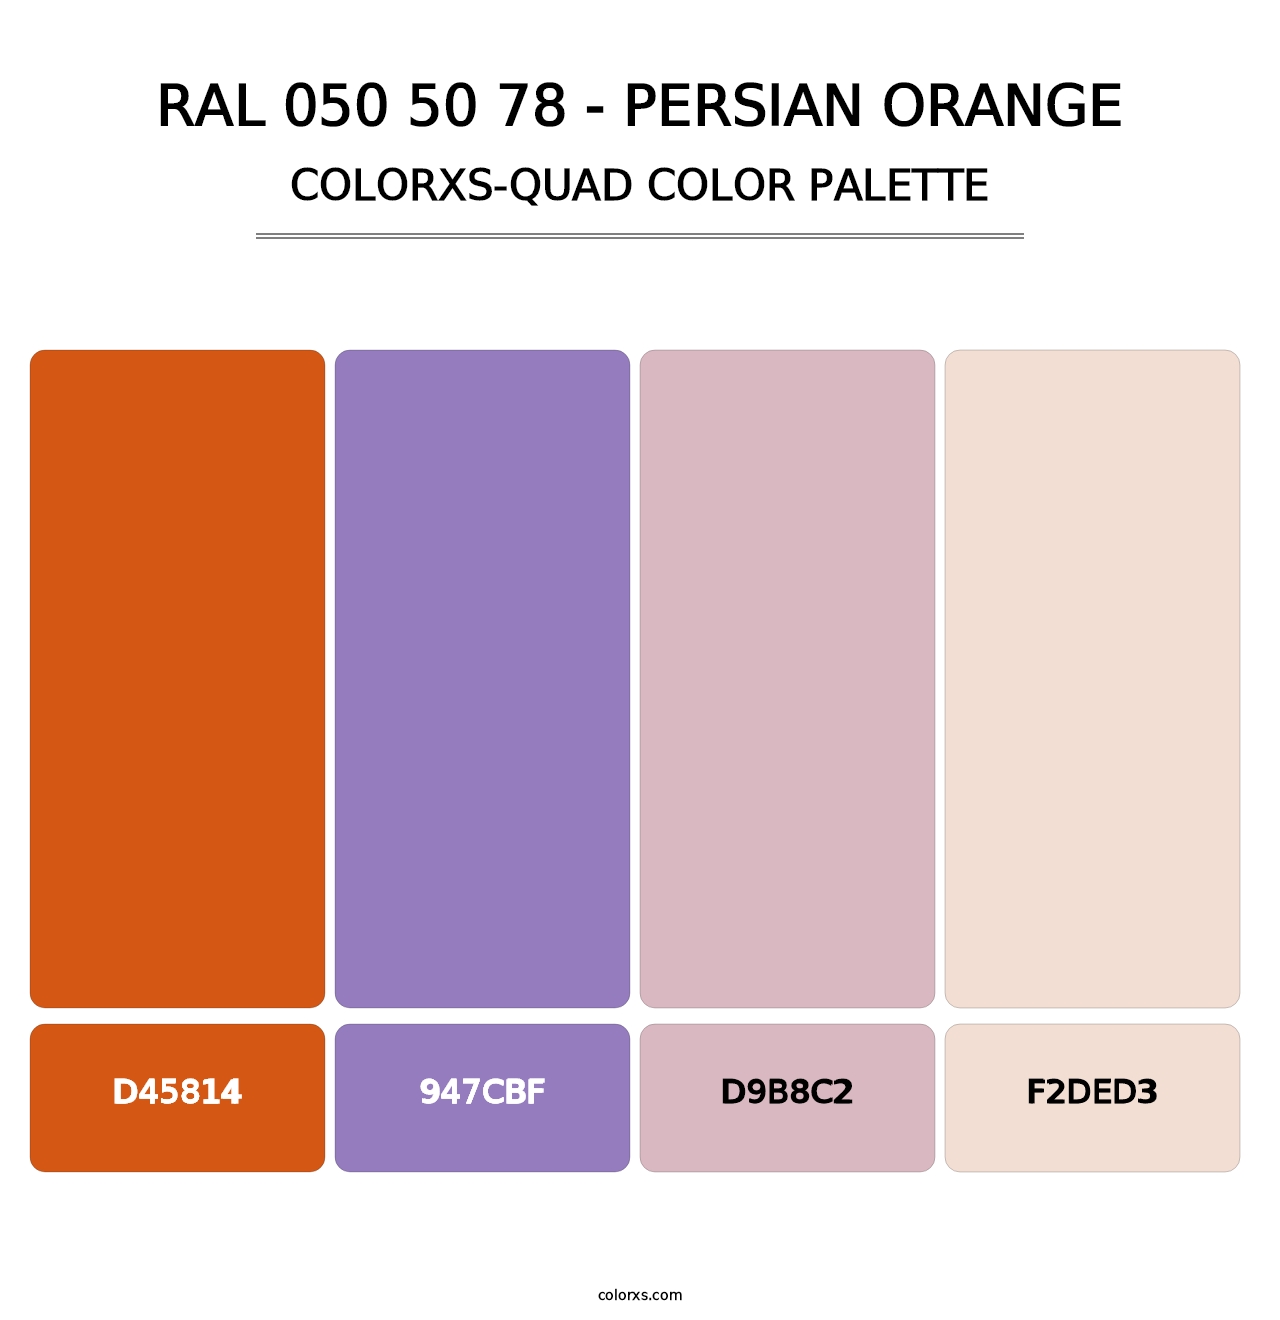 RAL 050 50 78 - Persian Orange - Colorxs Quad Palette